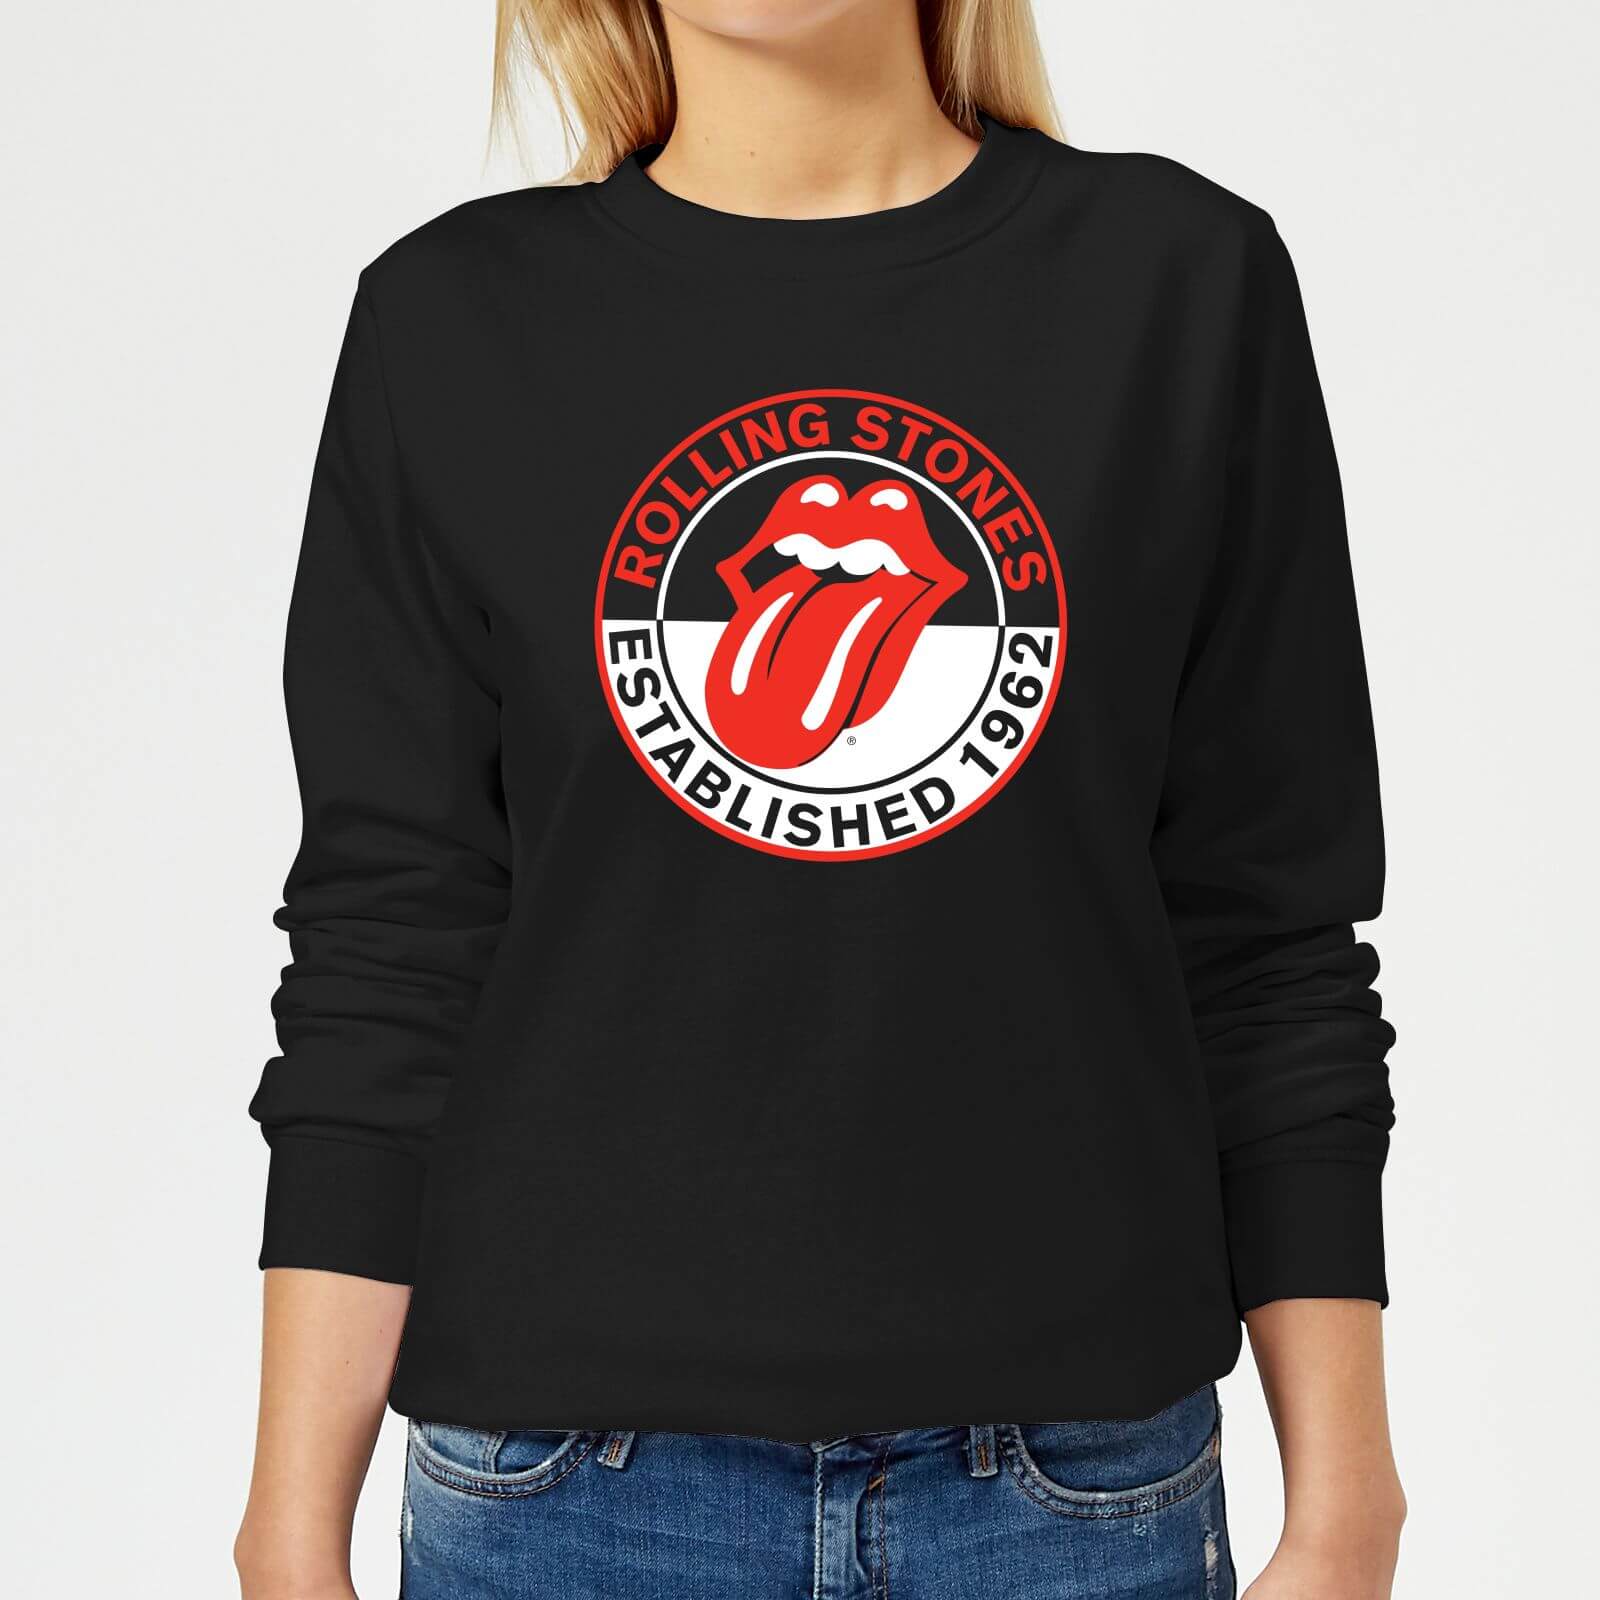 Rolling Stones Est 62 Women's Sweatshirt - Black - L - Black